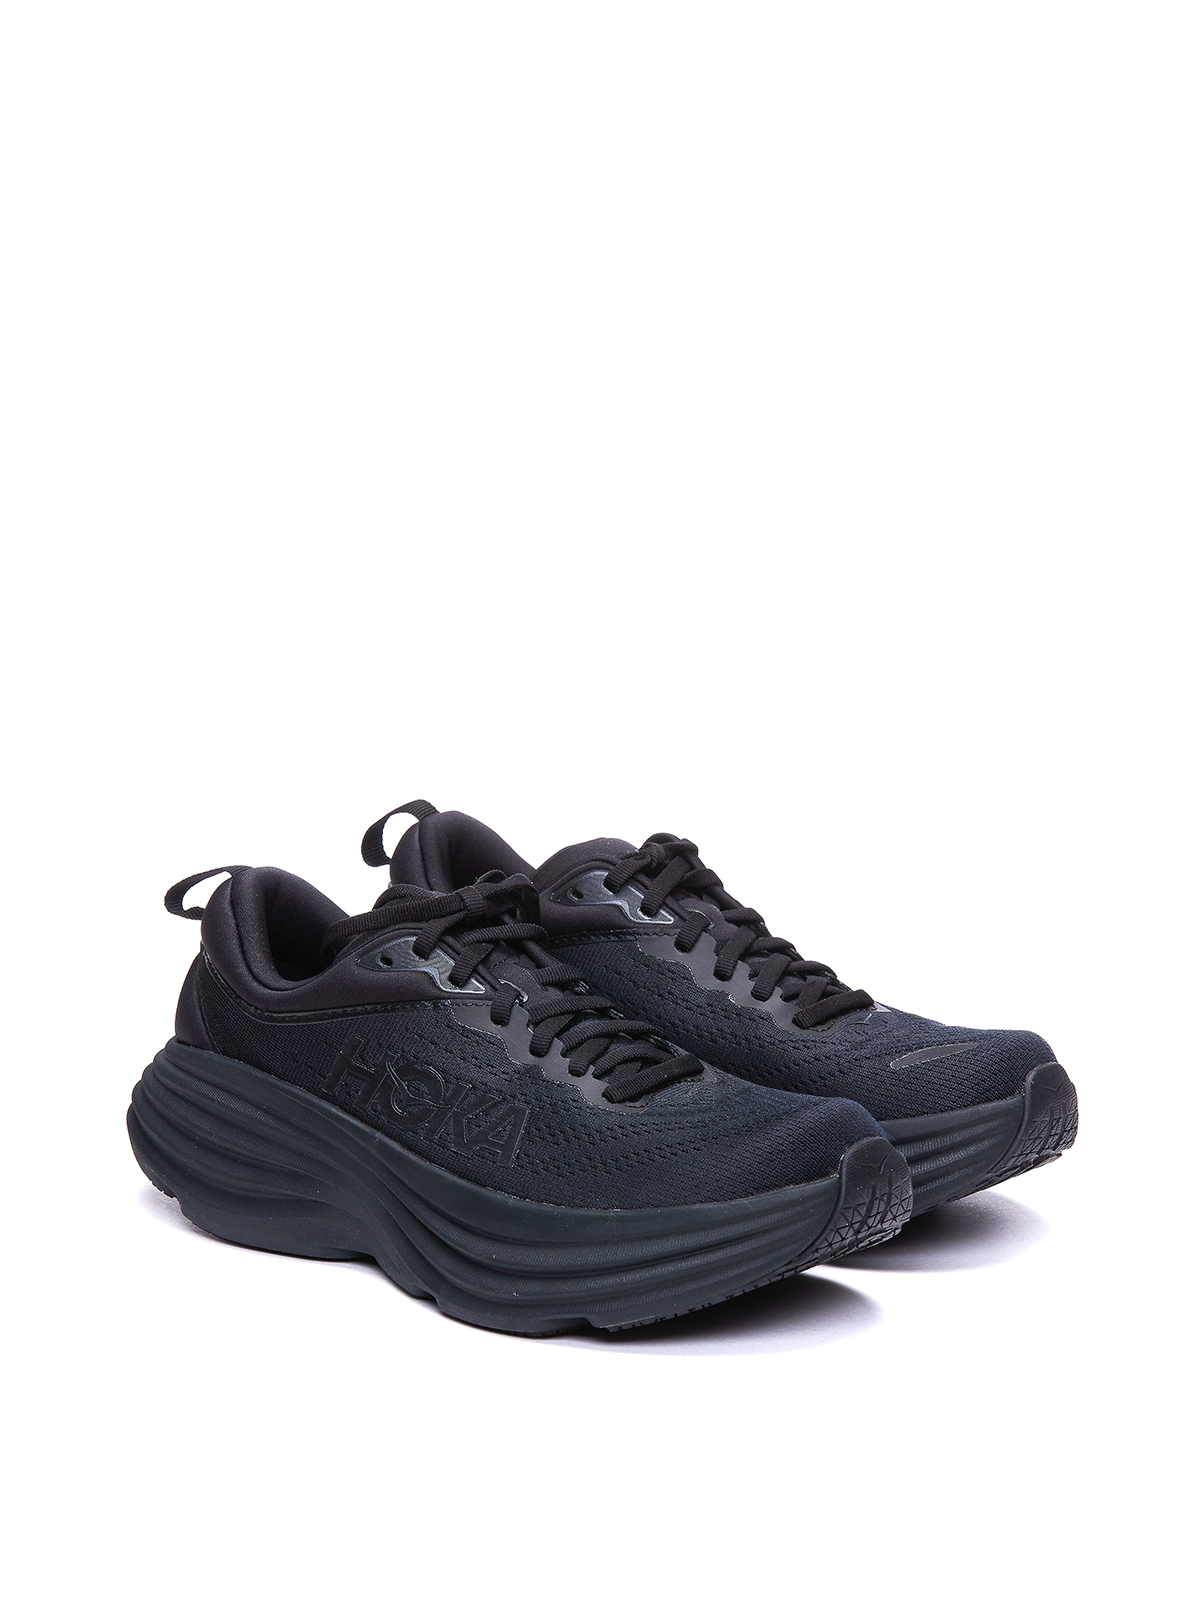 Trainers Hoka - Bondi 8 leather sneakers - 1123202BBLC | iKRIX.com